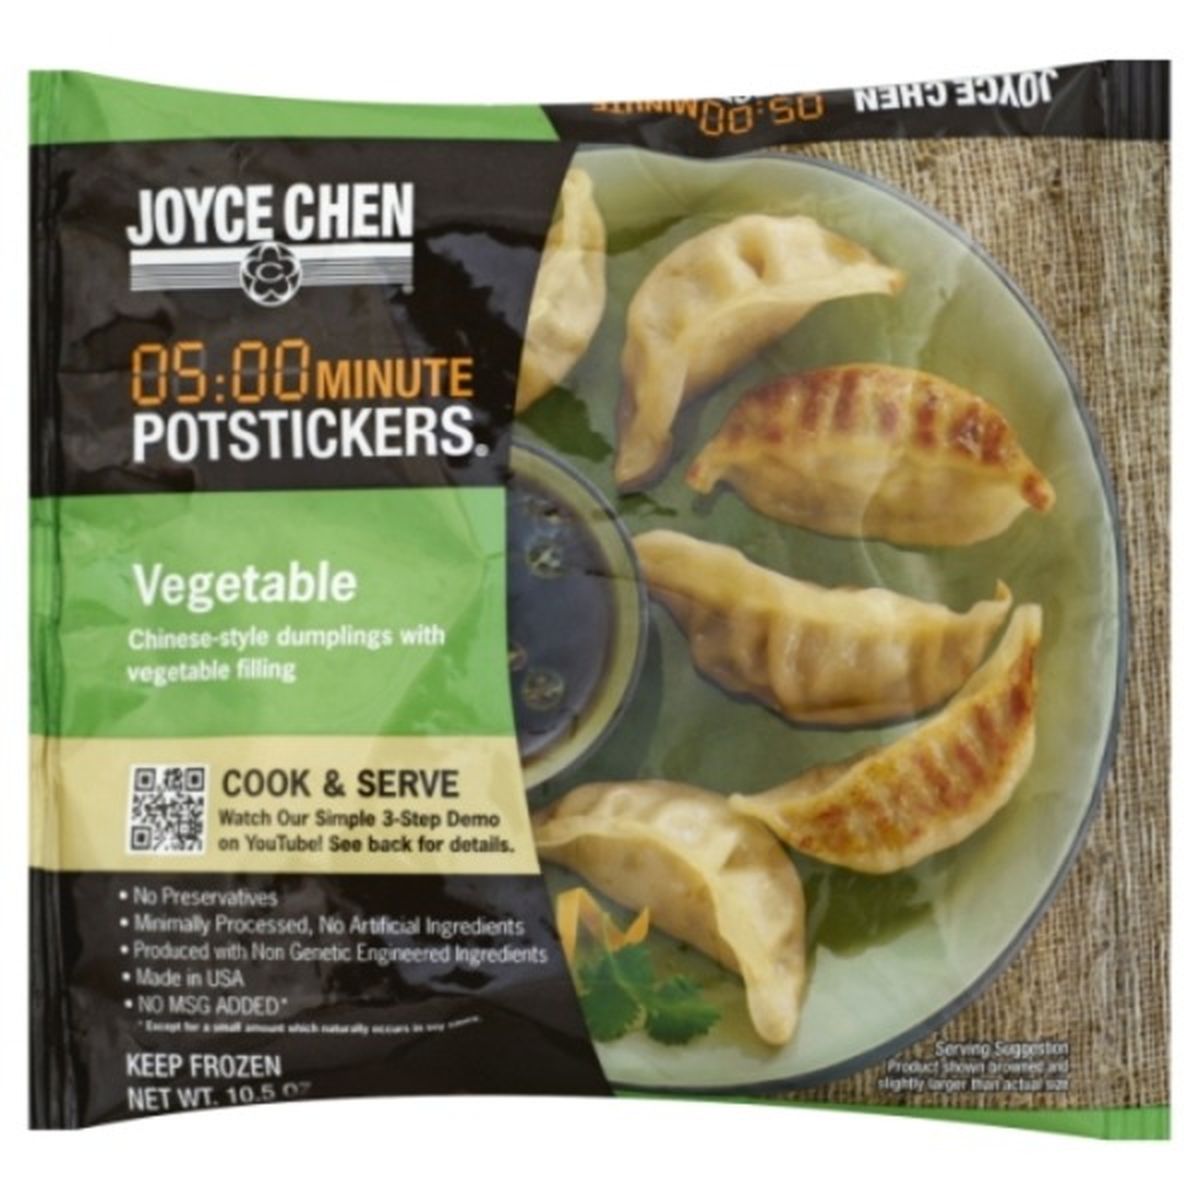 Calories in Joyce Chen Potstickers, 05:00 Minute, Vegetable